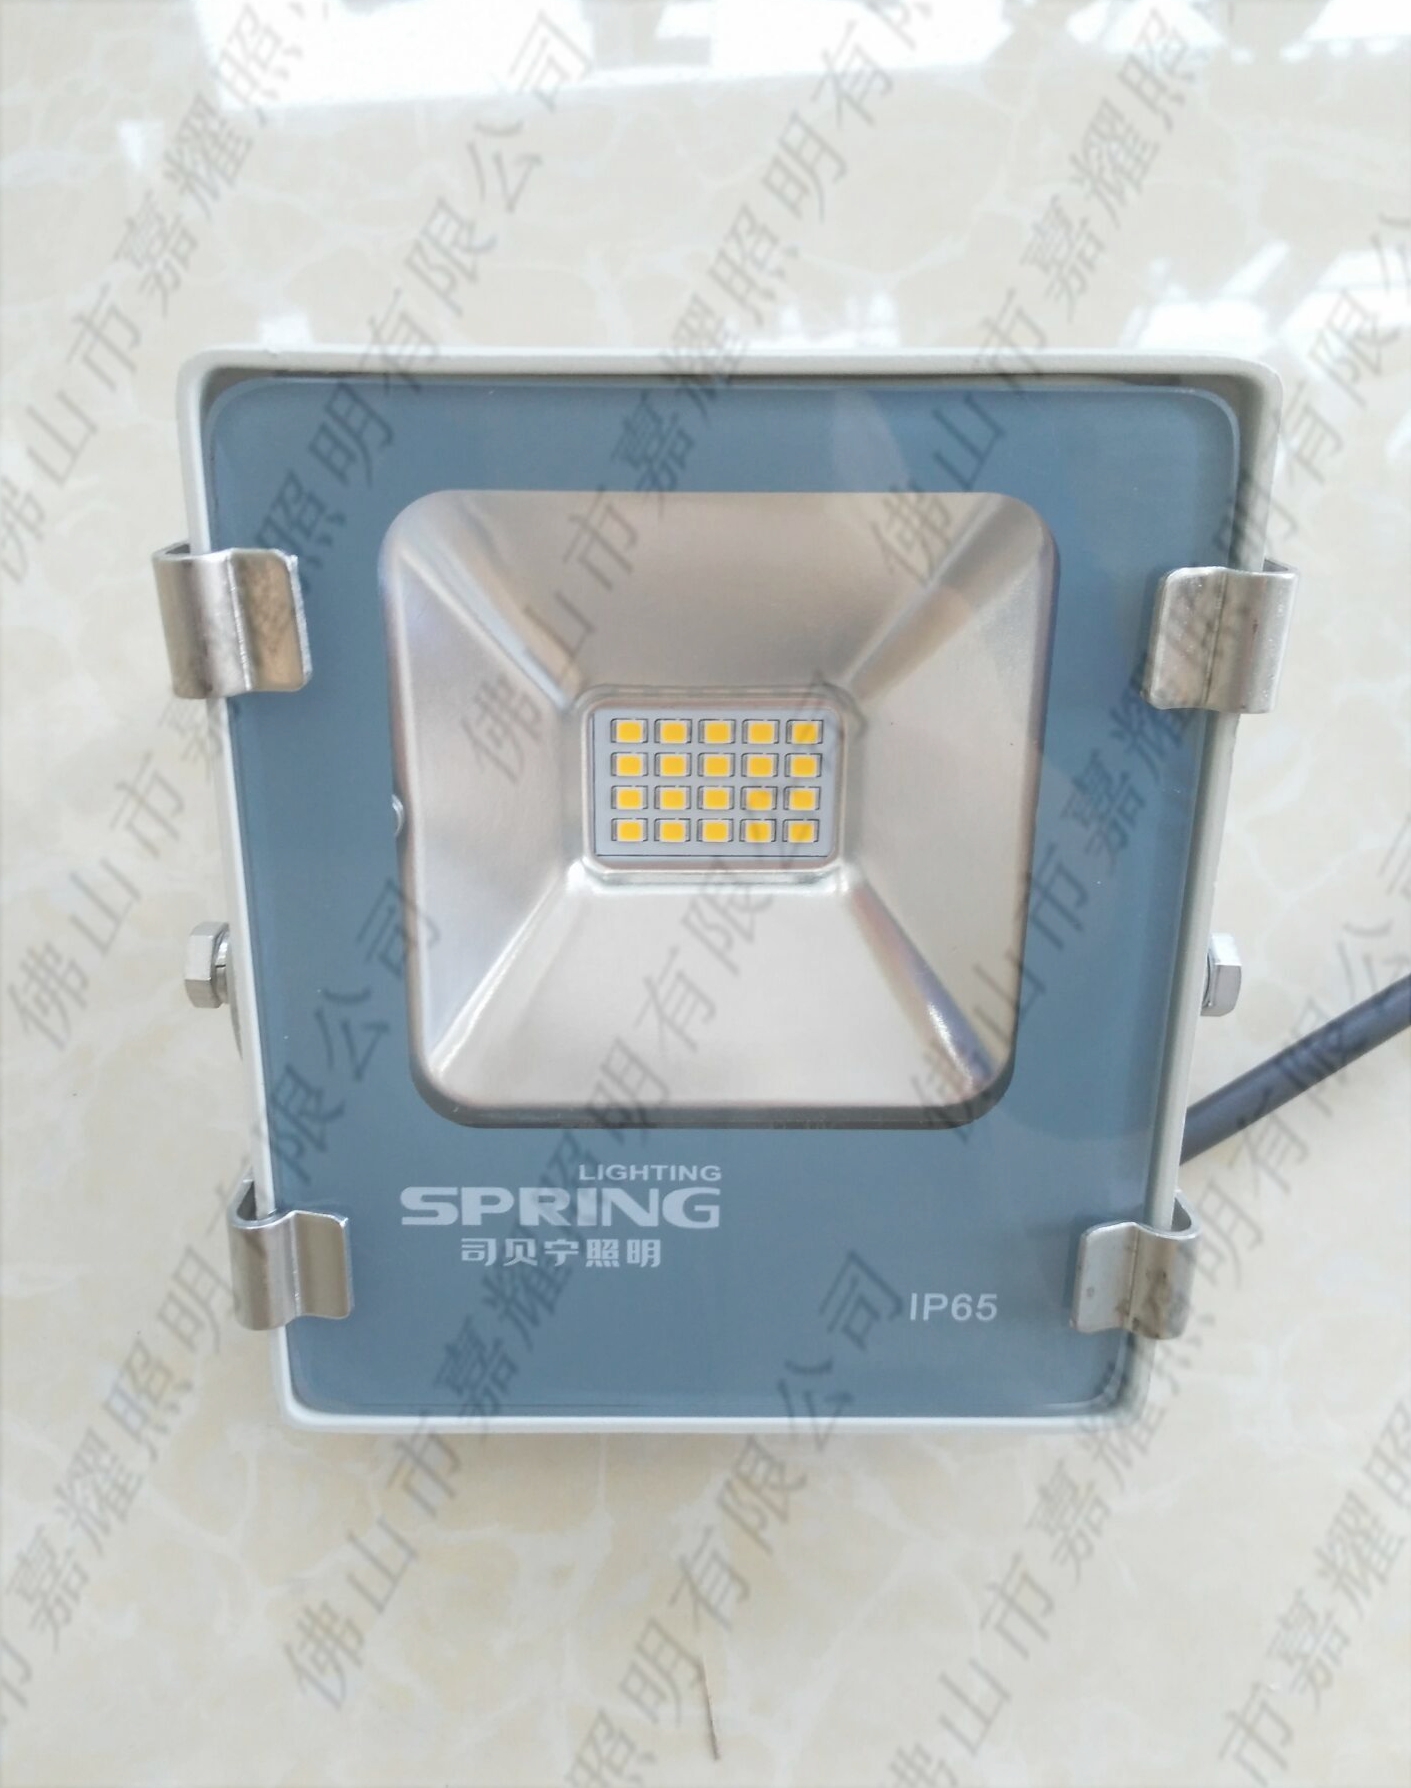 司贝宁LED投光灯 SBN-LED707 10W LED广告灯 迷你型招牌灯